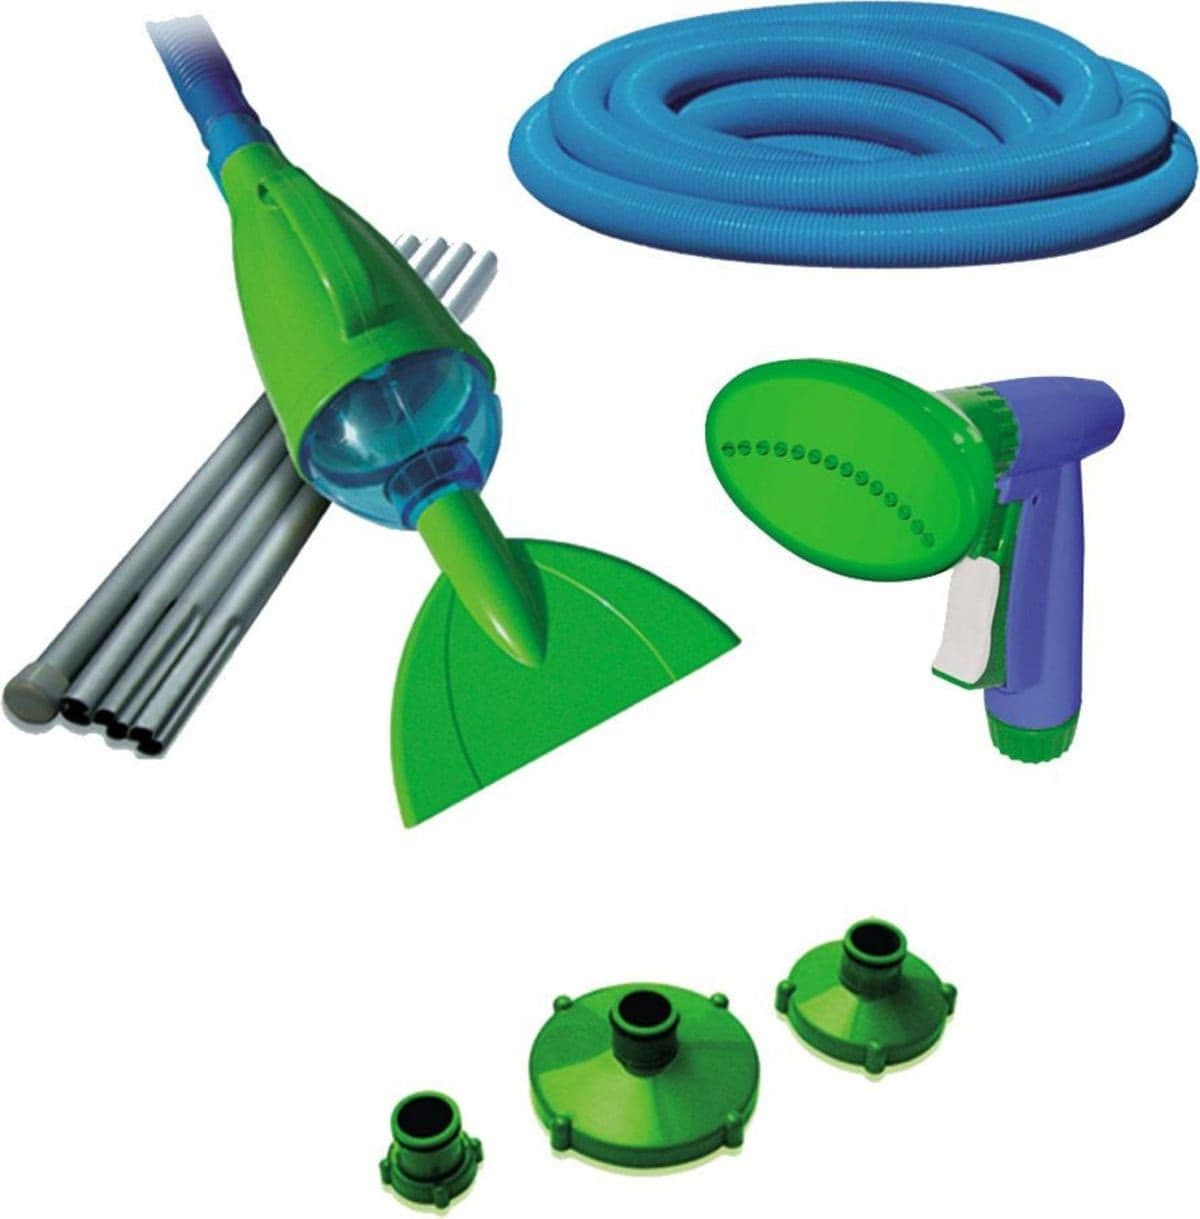 LITTLE VAC Bottom cleaner kit for swimming pools